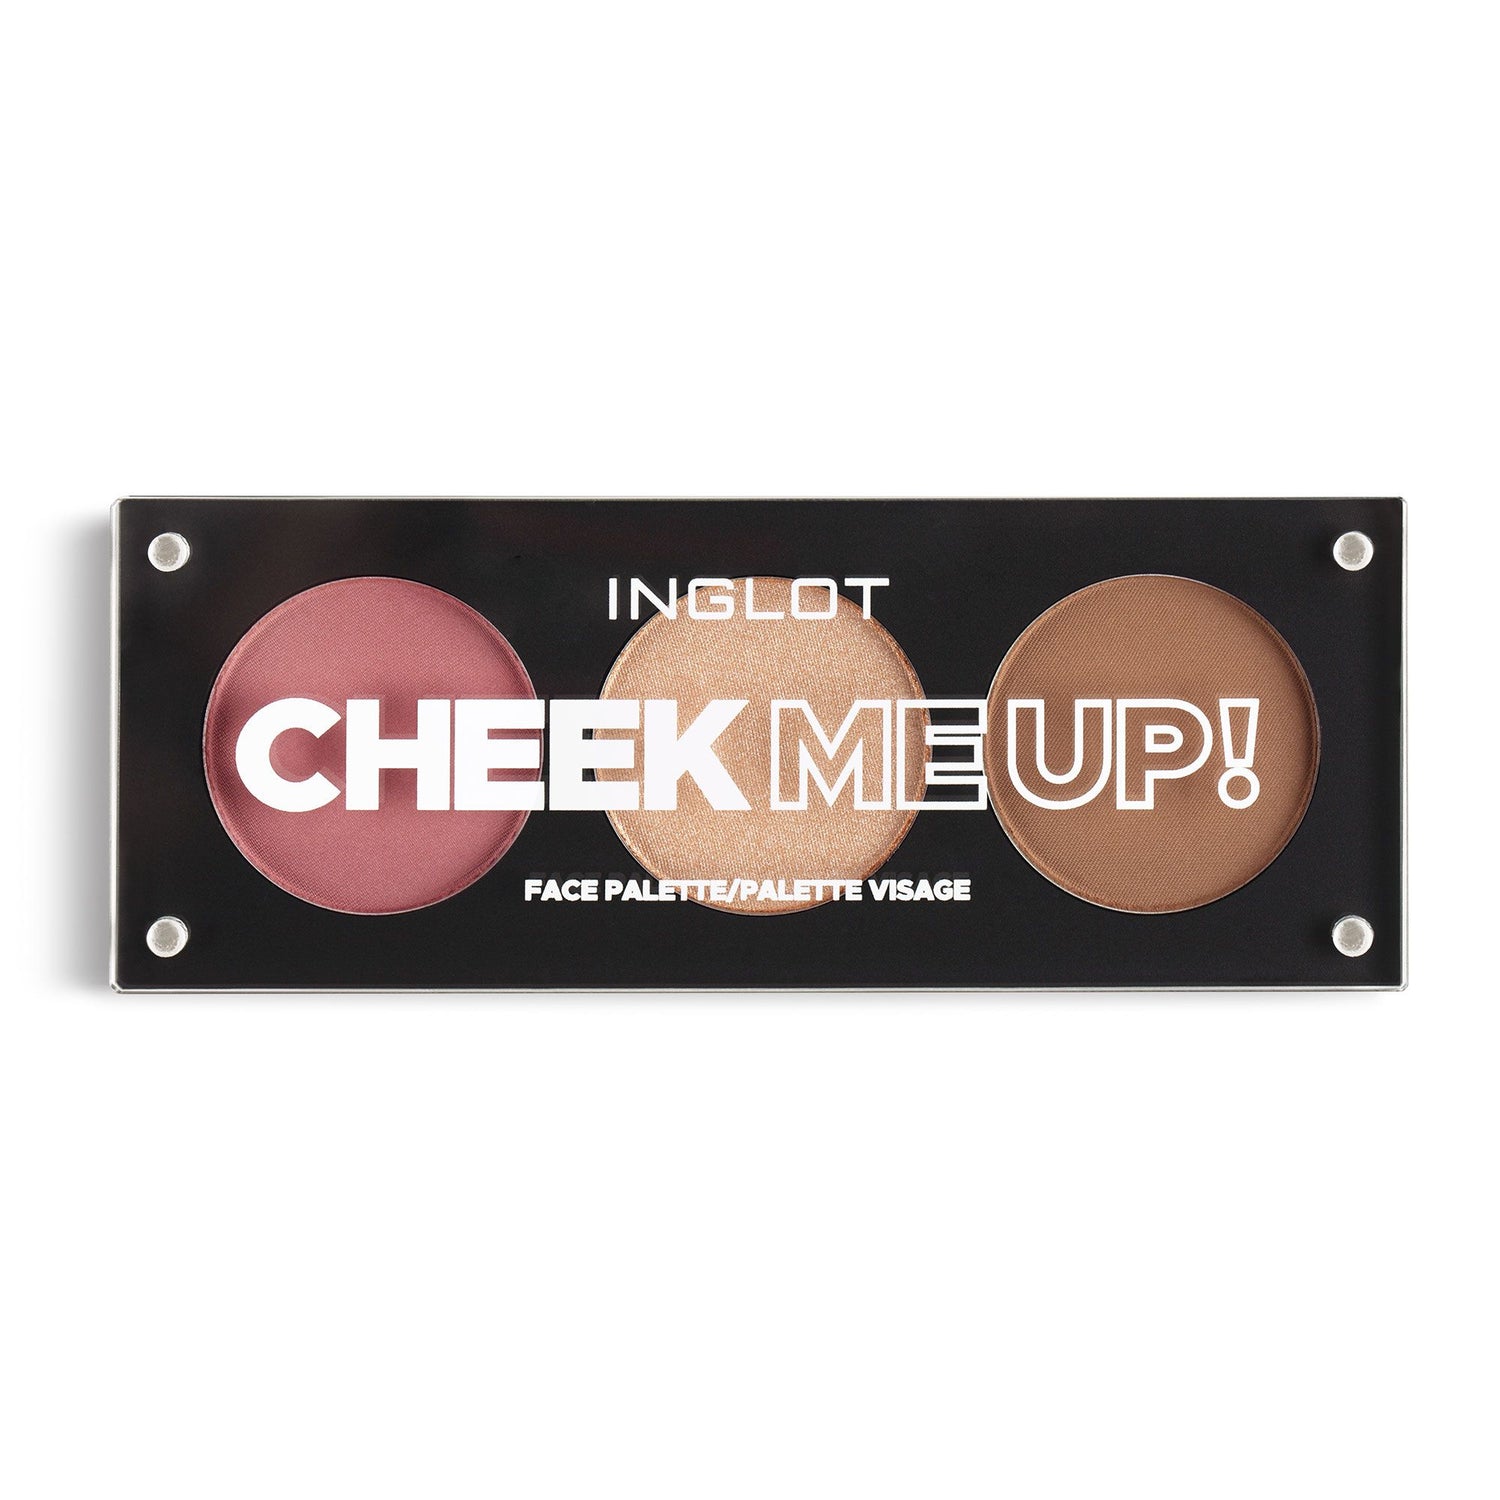 Cheek me Up! Face Palette - make-up palette - Inglot Cosmetics